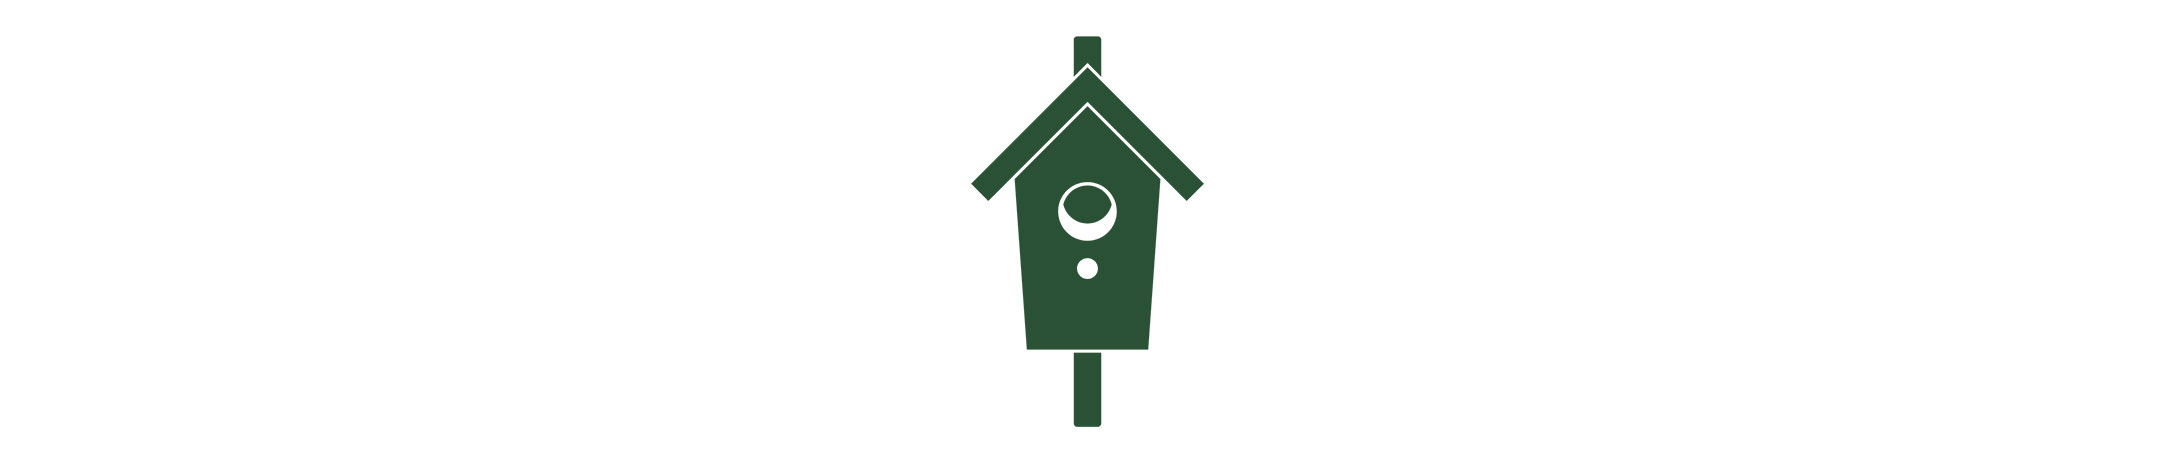 bird nest box icon